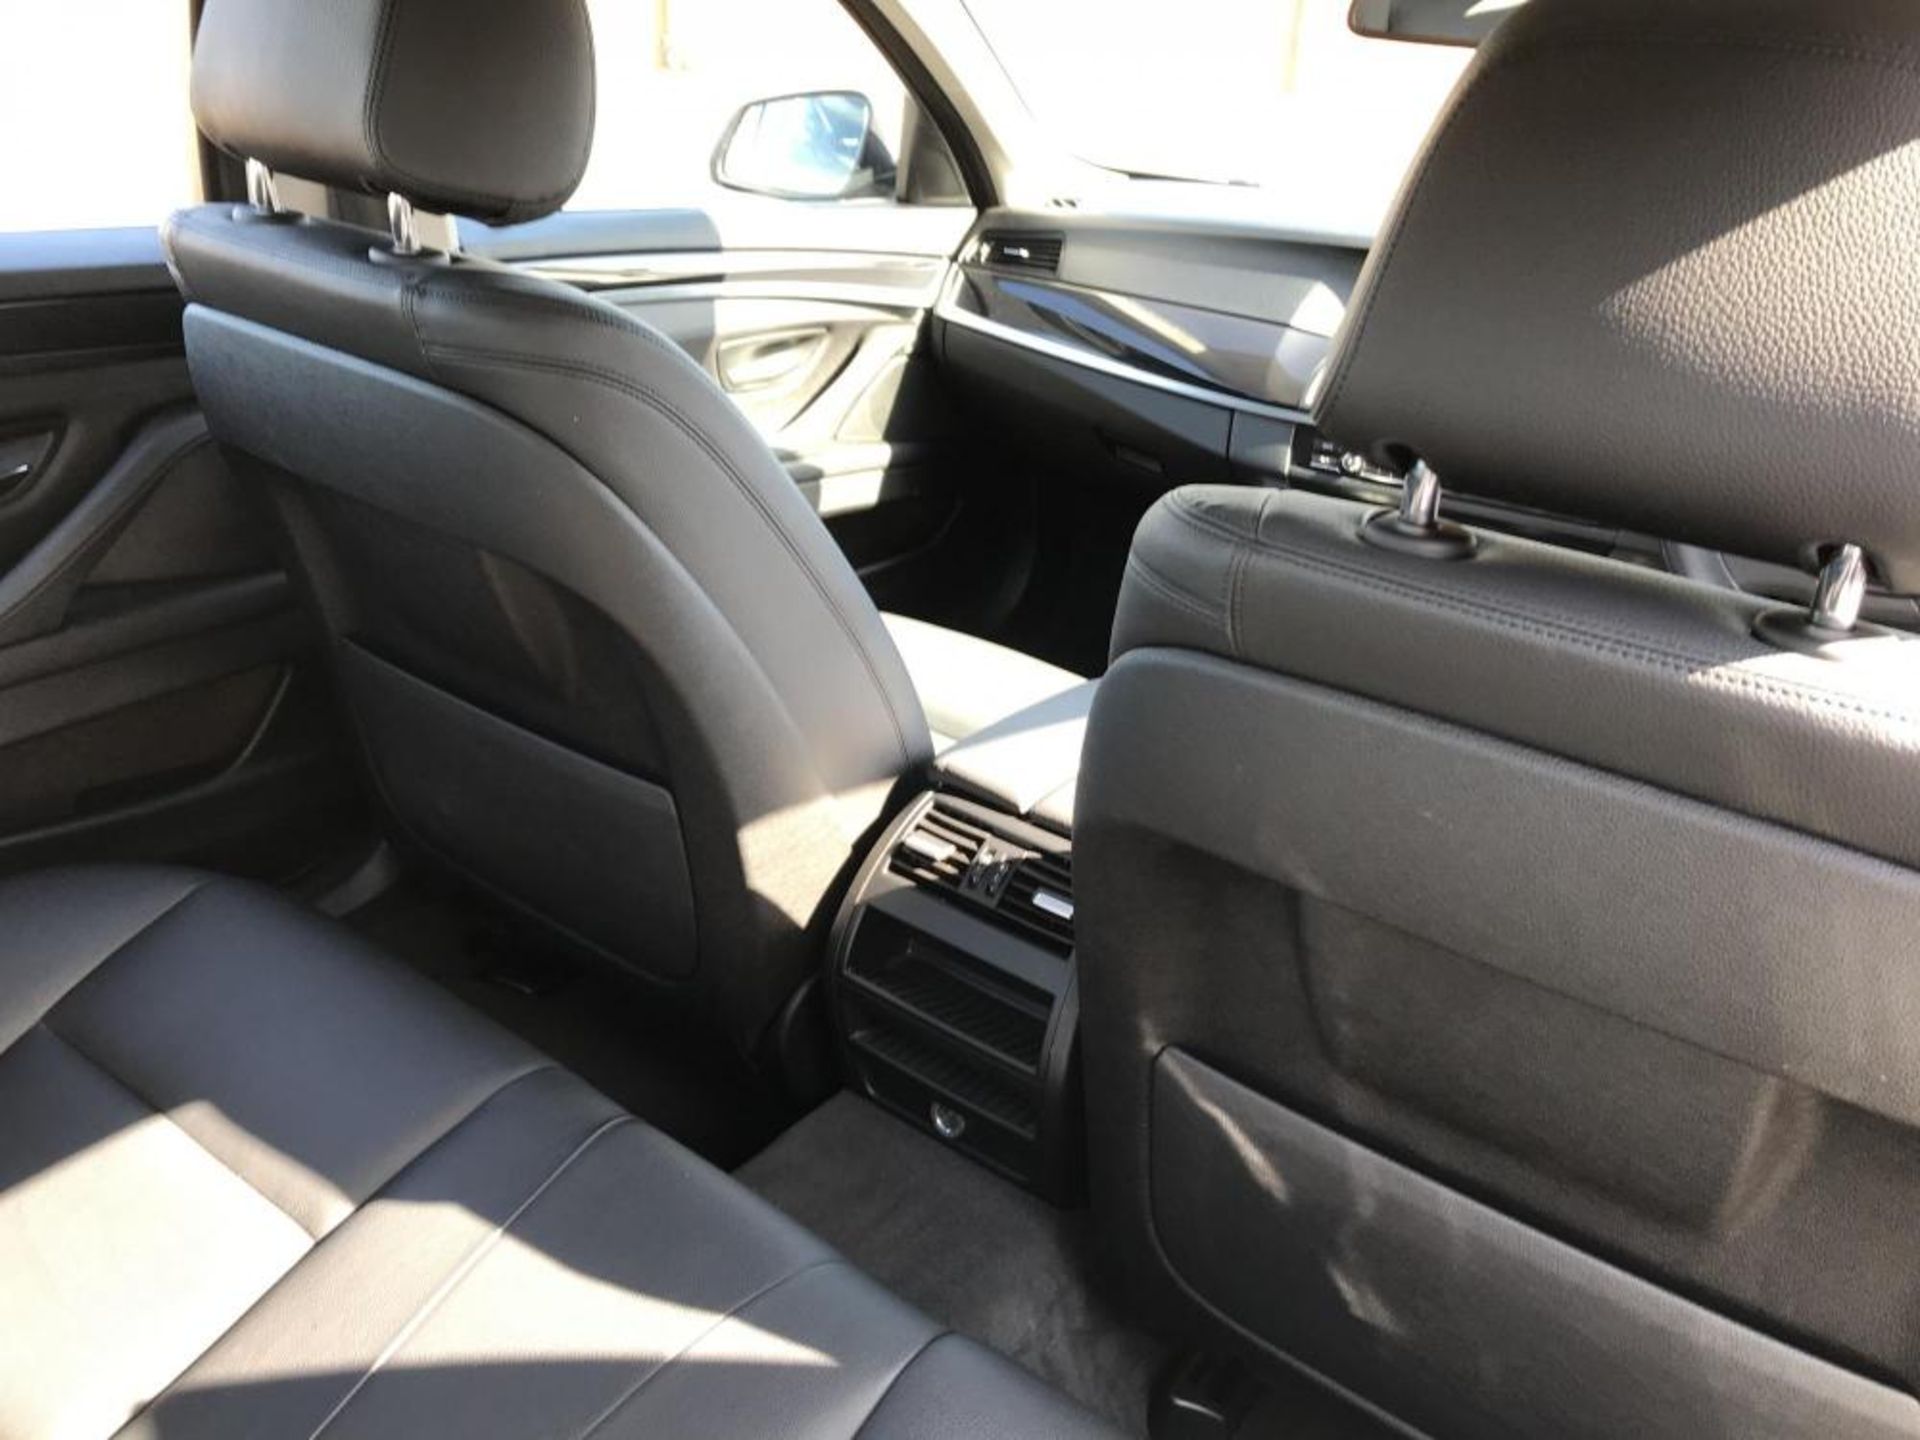 2015/65 REG BMW 520D SE AUTO 2.0 DIESEL 4 DOOR SALOON, SHOWING 0 FORMER KEEPERS *NO VAT* - Image 12 of 19